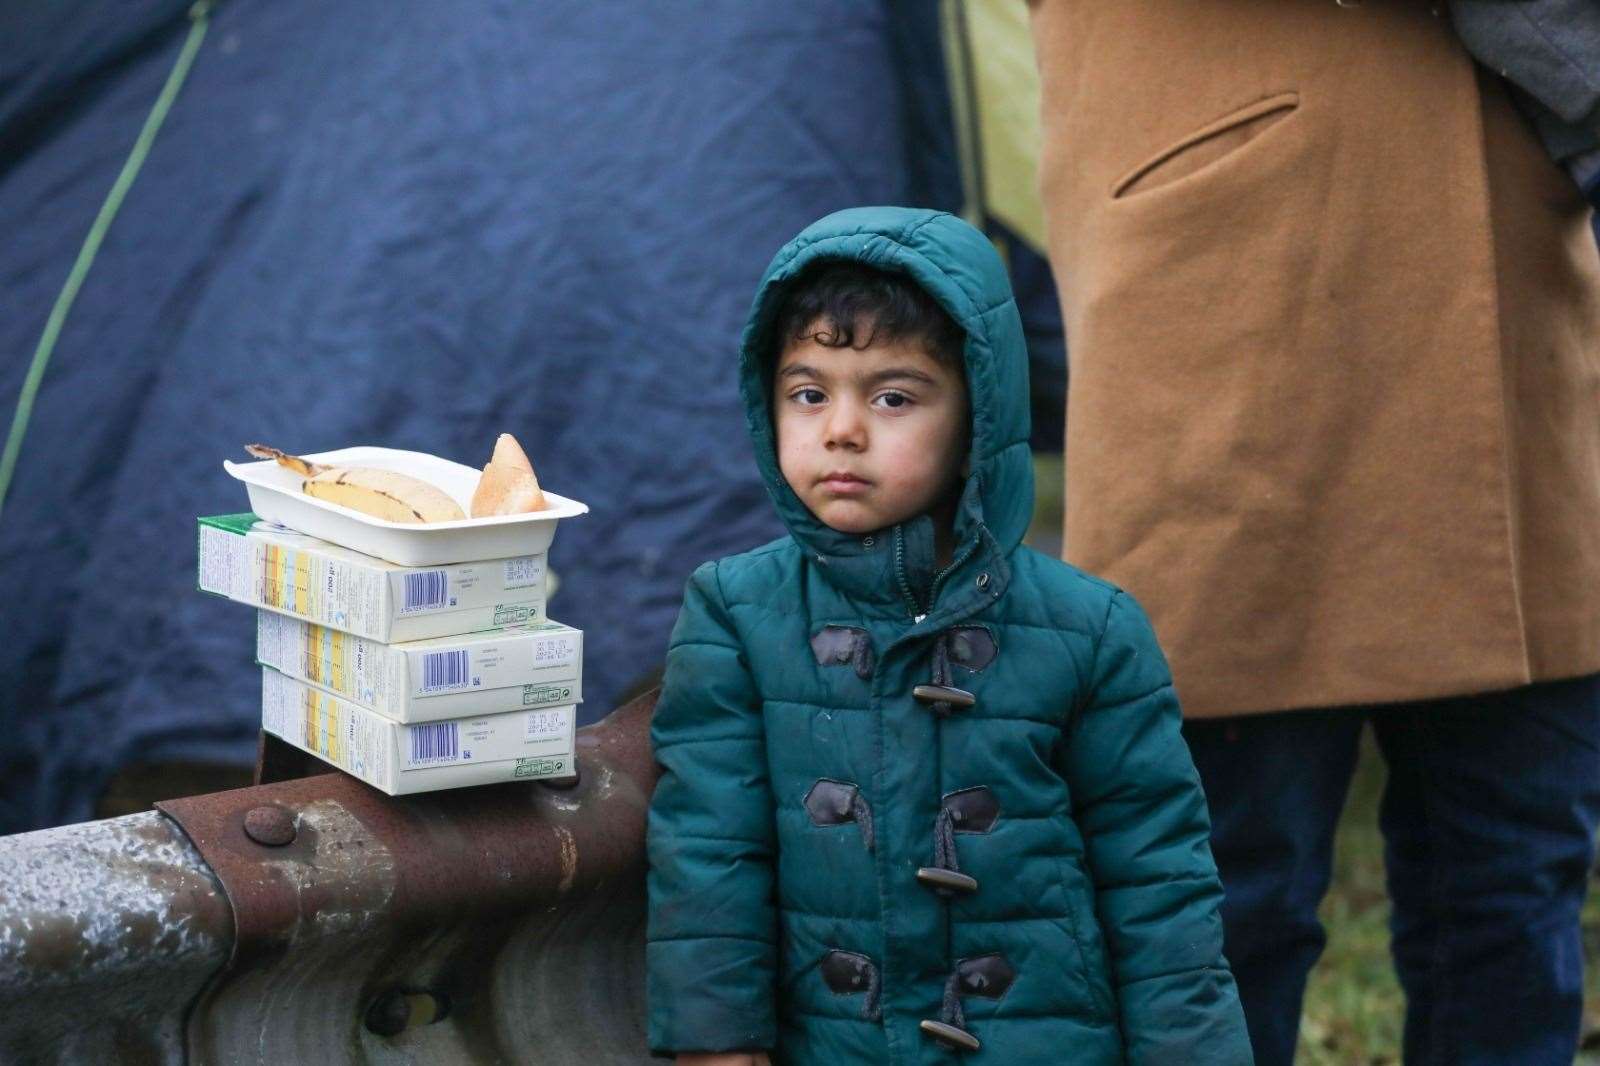 A child asylum seeker in Calais Picture: UKNIP